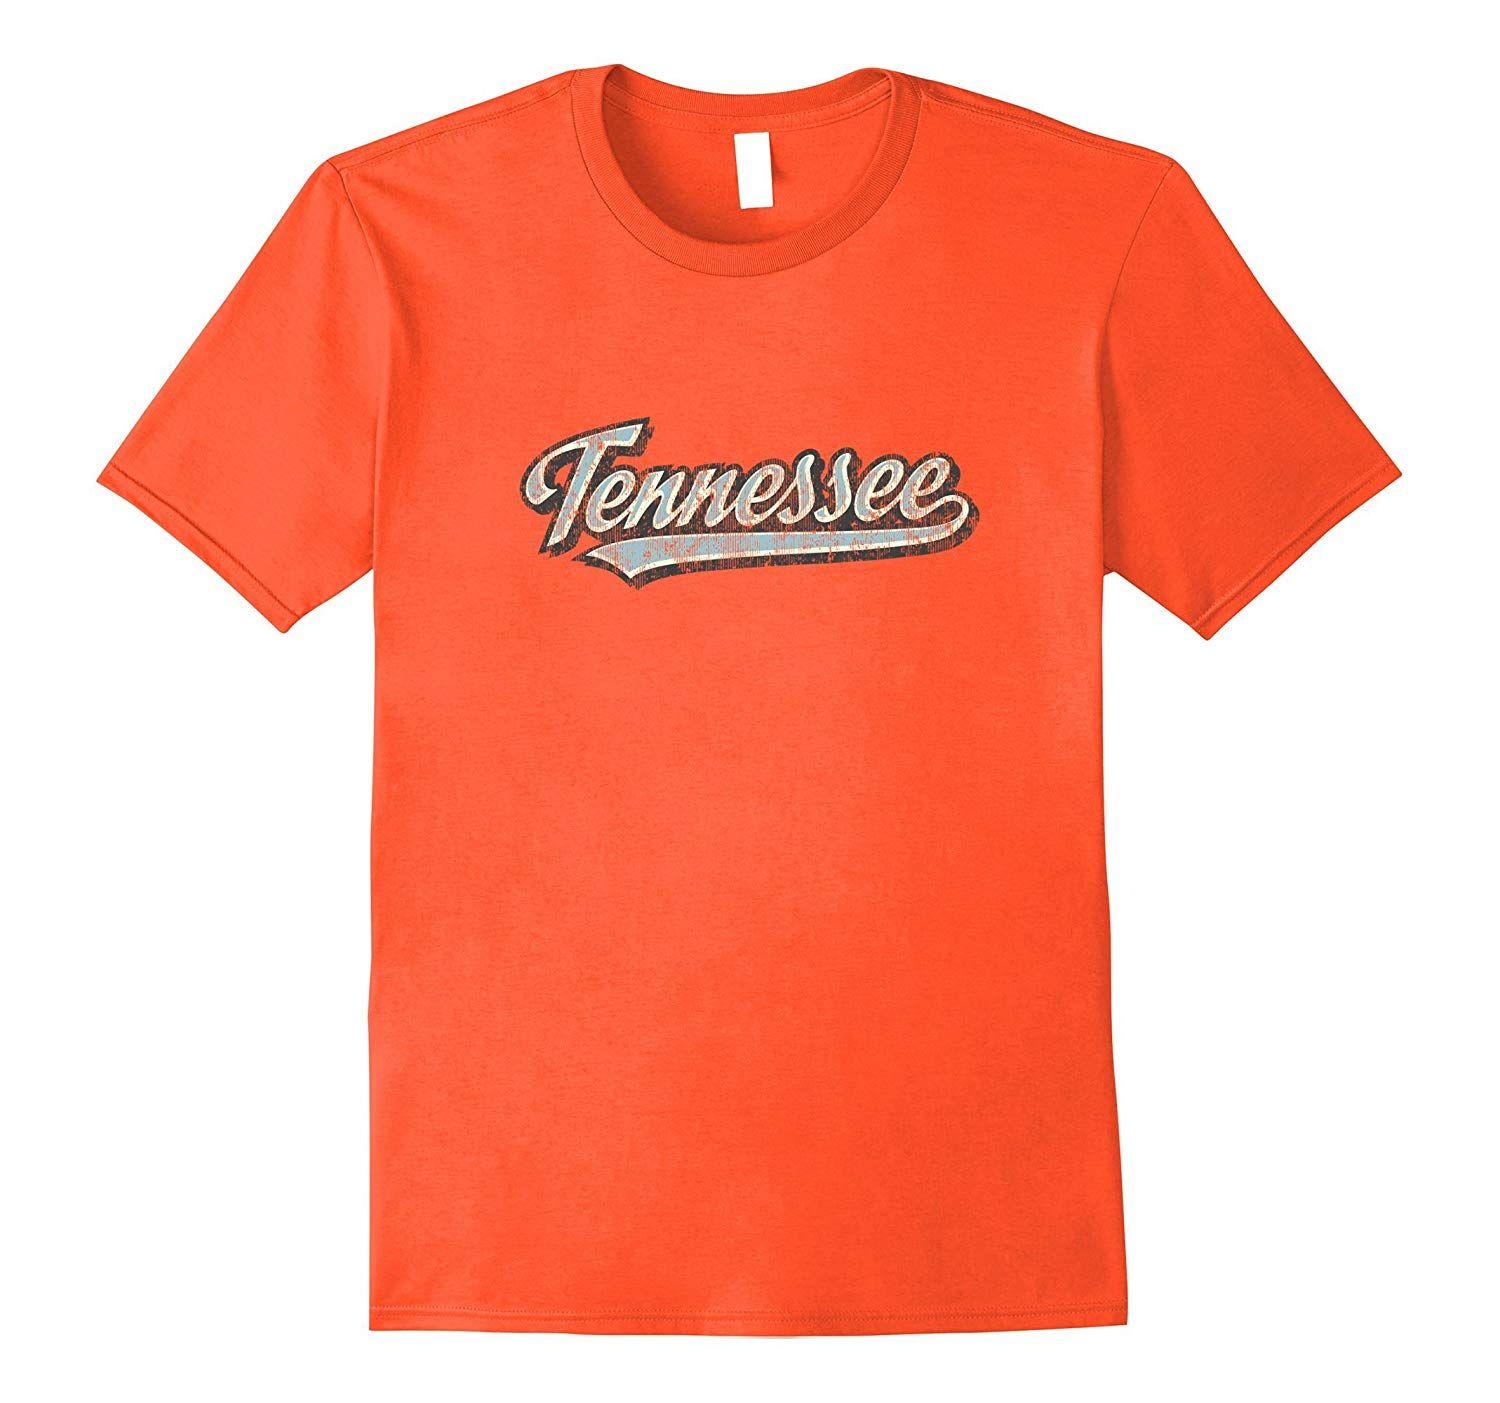 Retro Sports Tennessee Orange Logo - Retro Tennessee T Shirt Vintage Sports Tee Design-ANZ - Anztshirt